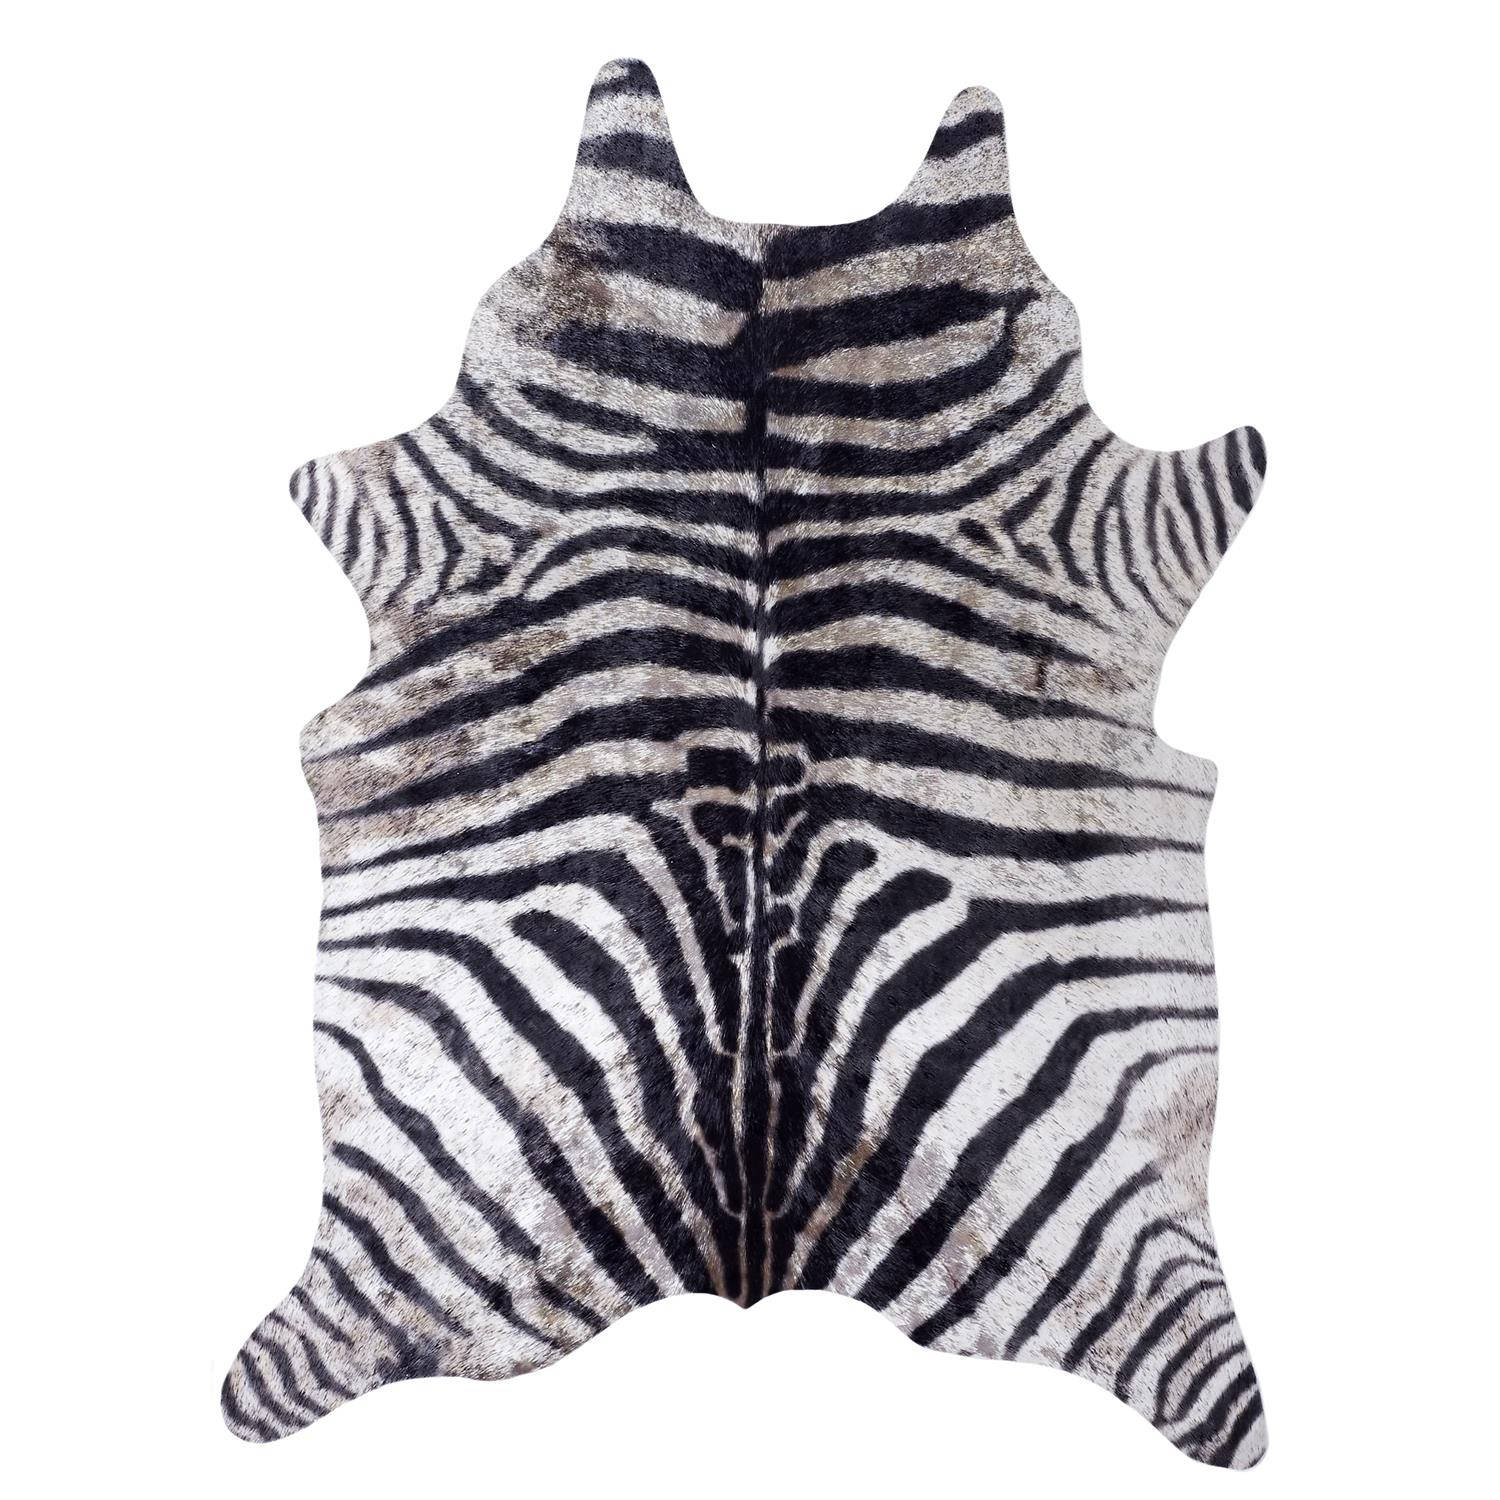 4goodz Vloerkleed Zebra Vacht Polyester 120x158 Cm Zwart Wit